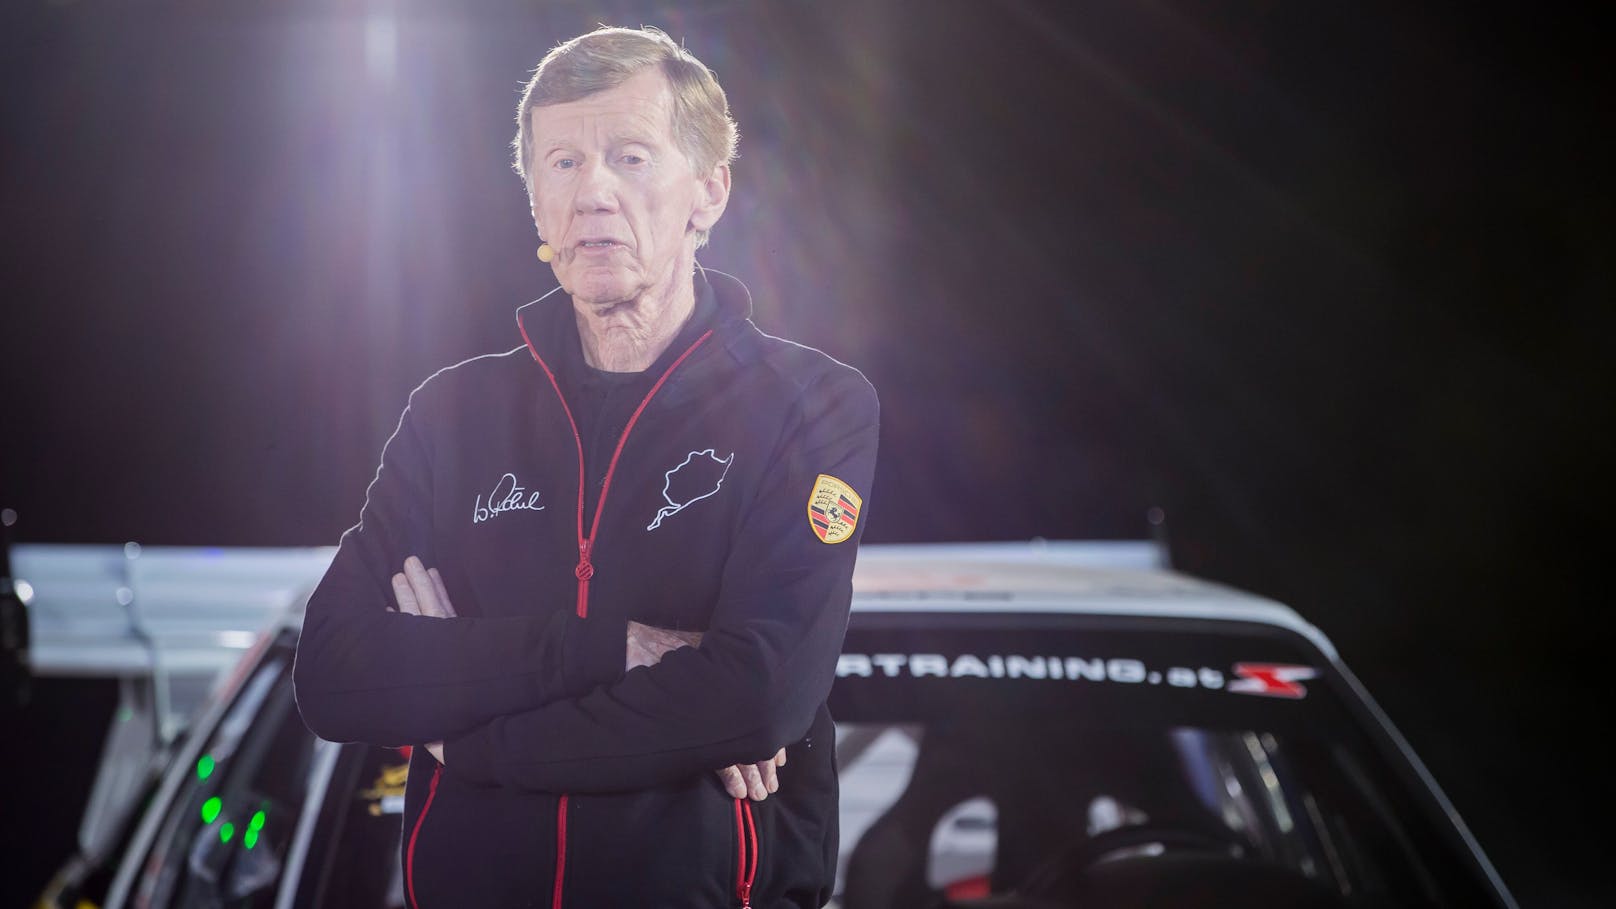 Rallye-Legende: "Formel 1 ist wie Kindergeburtstag"